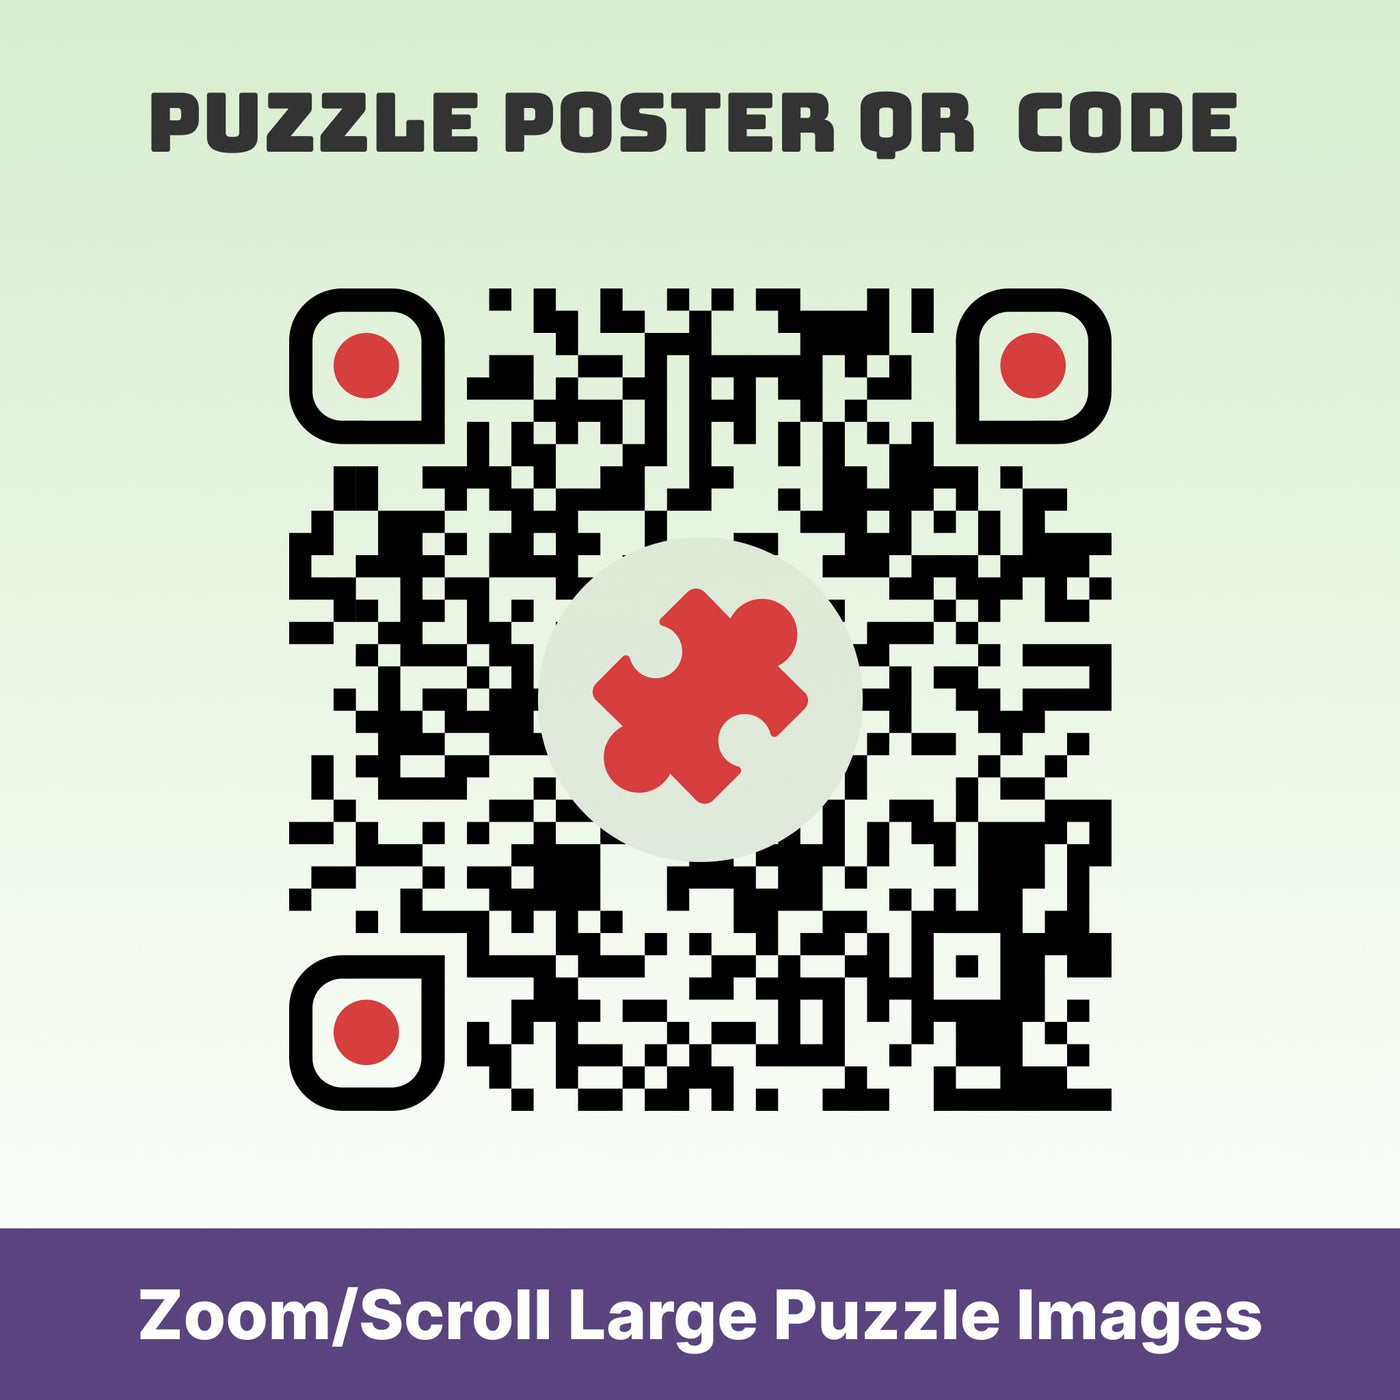 Tomorrow AR Pocket Puzzle, 150 Pieces - puzzletubes